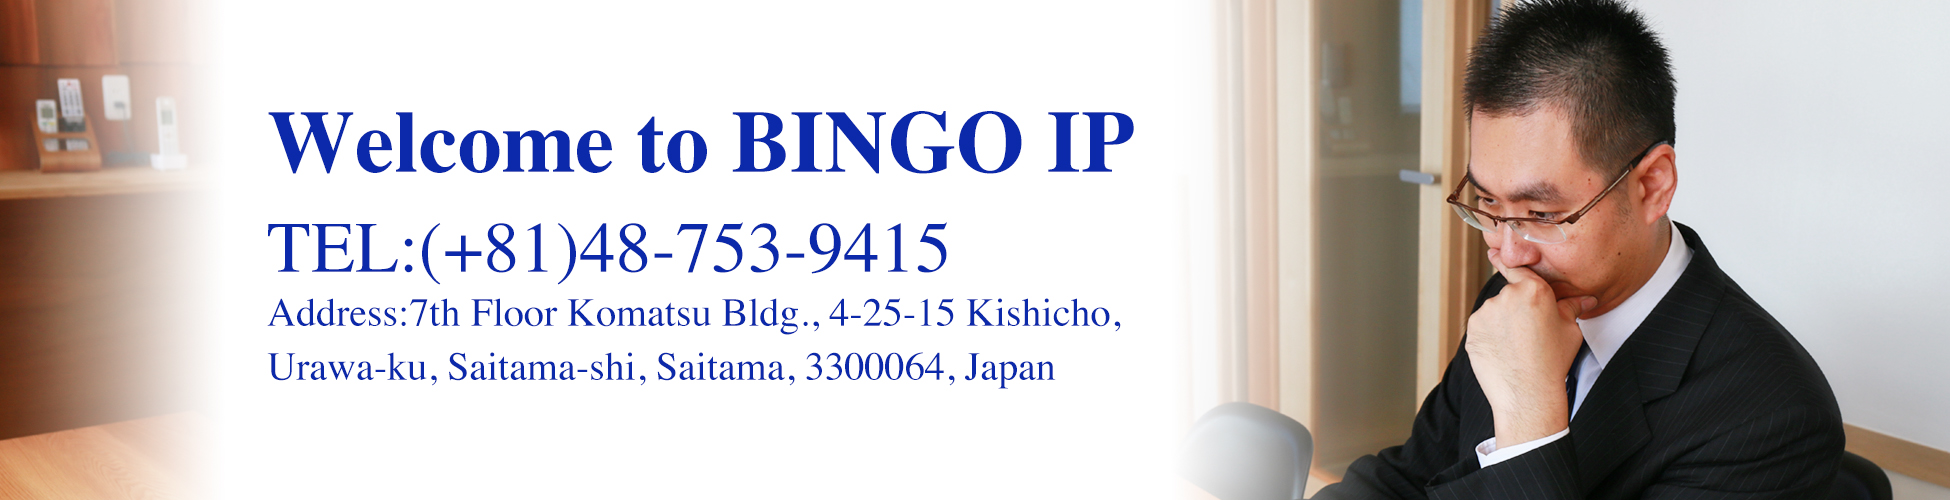 Welcome to BINGO IP